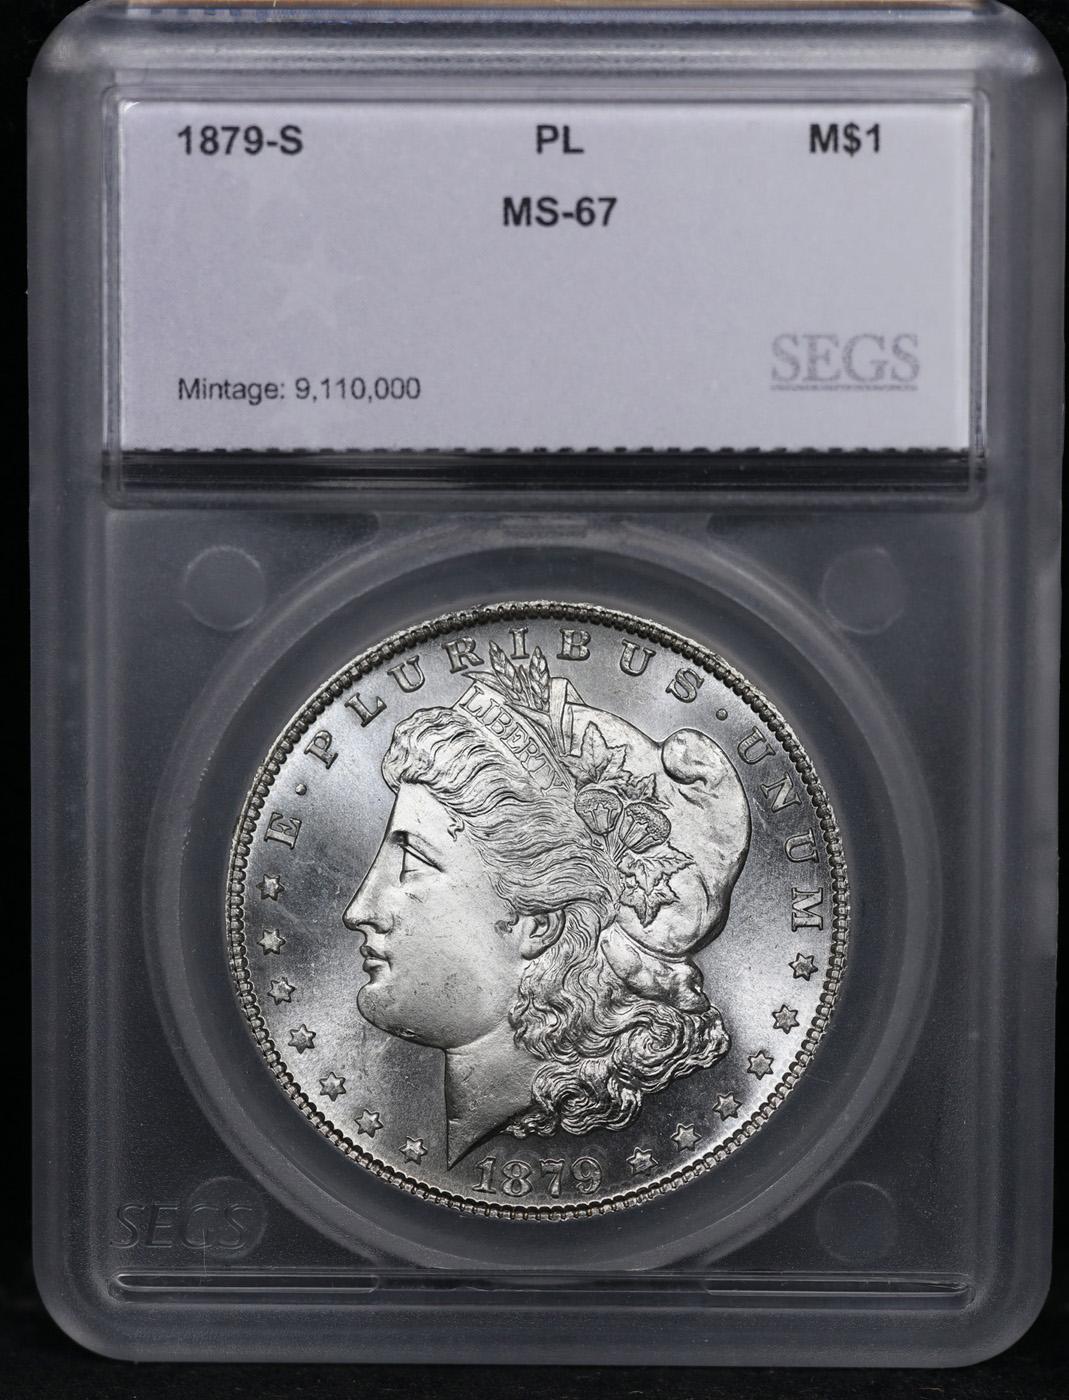 ***Auction Highlight*** 1879-s Morgan Dollar Near Top Pop! $1 Graded ms67 PL By SEGS (fc)